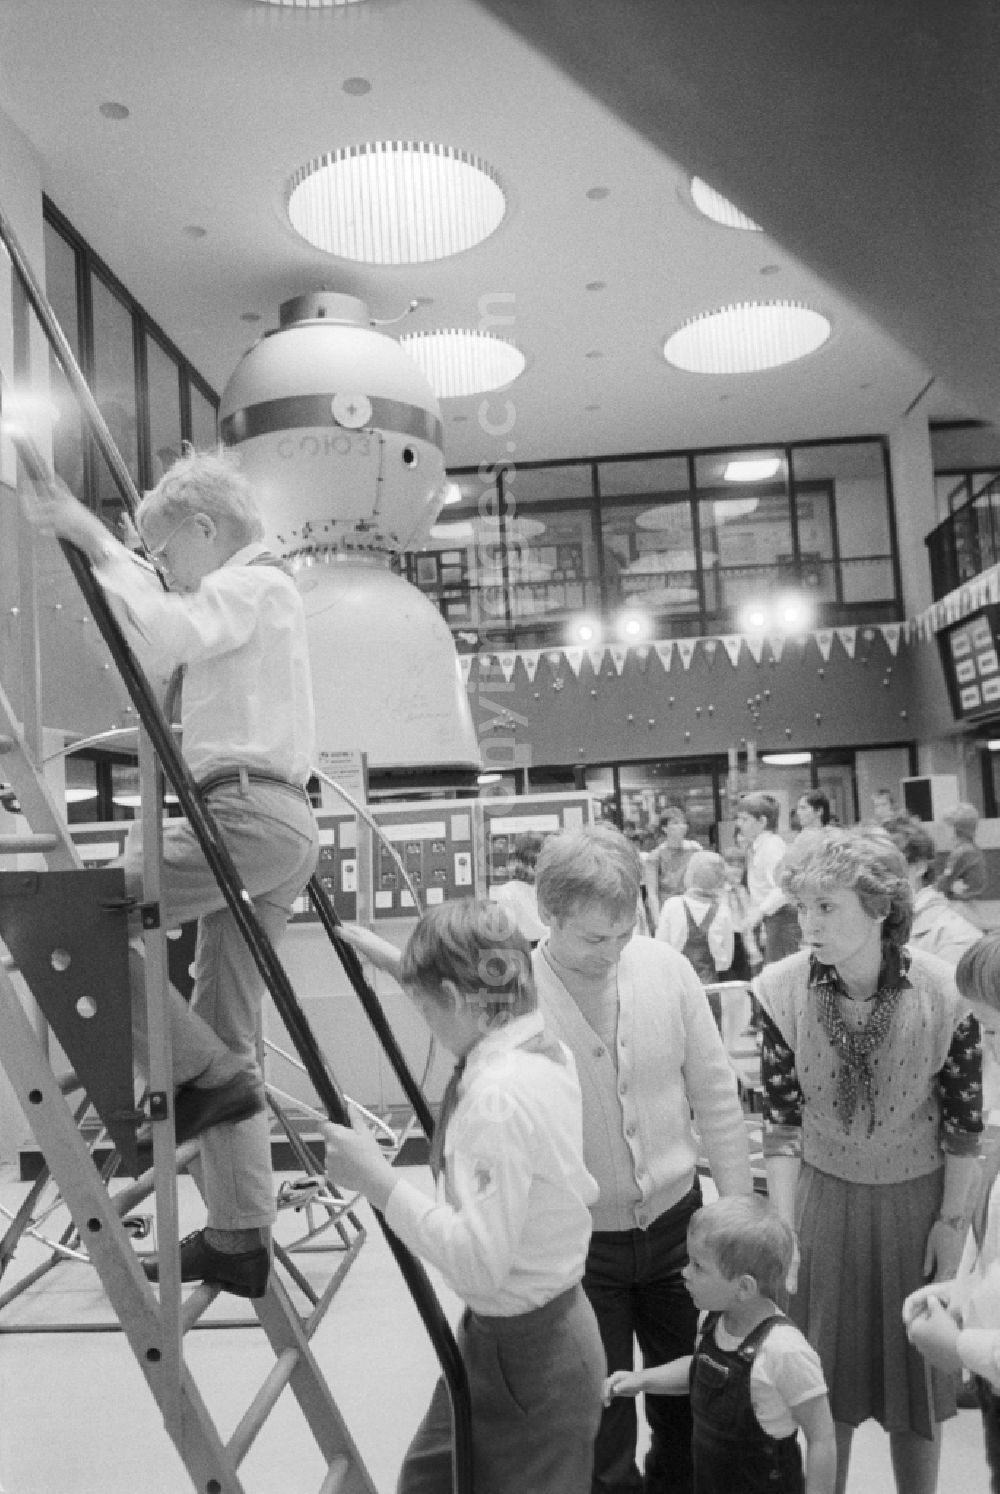 GDR photo archive: Berlin - Pioneers in the Pioneer Palace - cosmonaut center in the Wuhlheide in Berlin